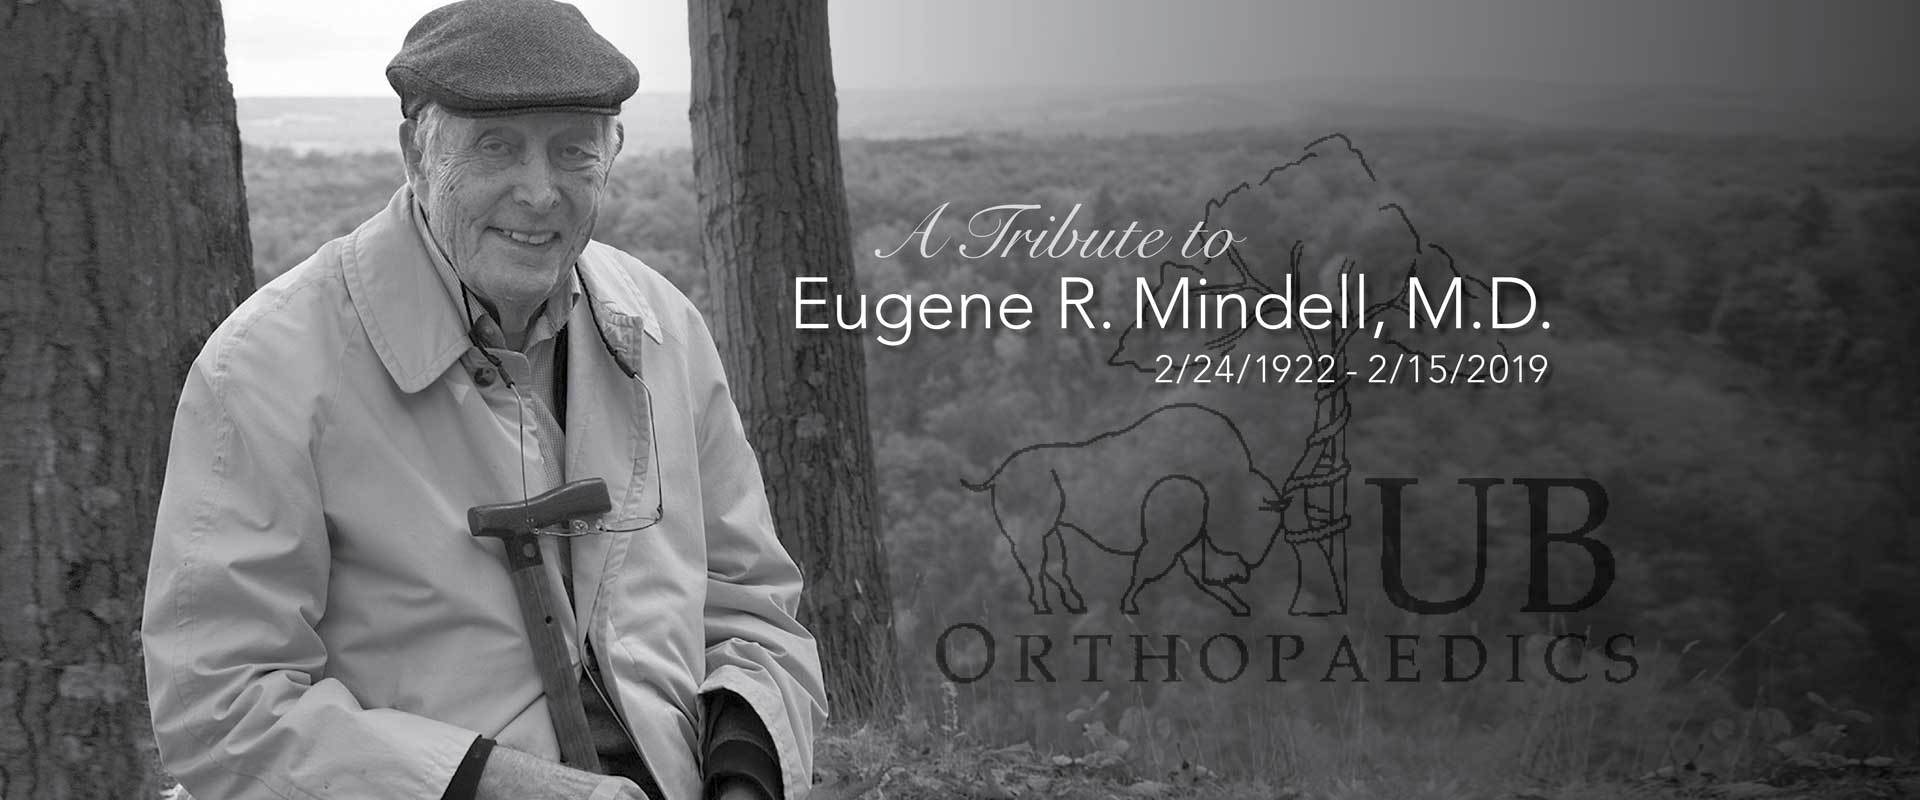 UBMD Ortho Mourns the Loss of Dr. Eugene R. Mindell